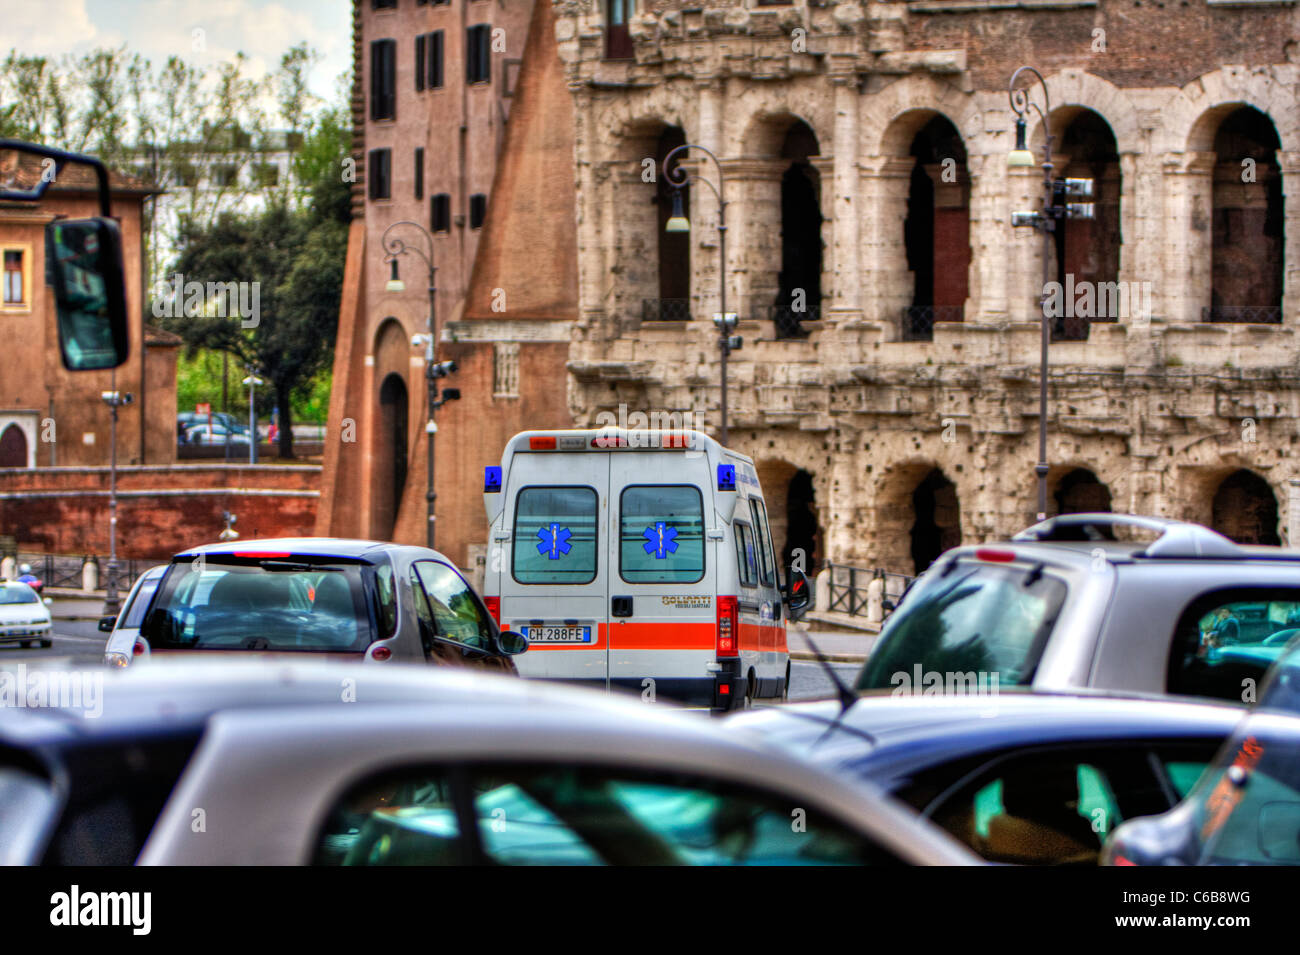 Rome Italy Europe, Italian ambulance near amphitheater like Colosseum working traveling Stock Photo